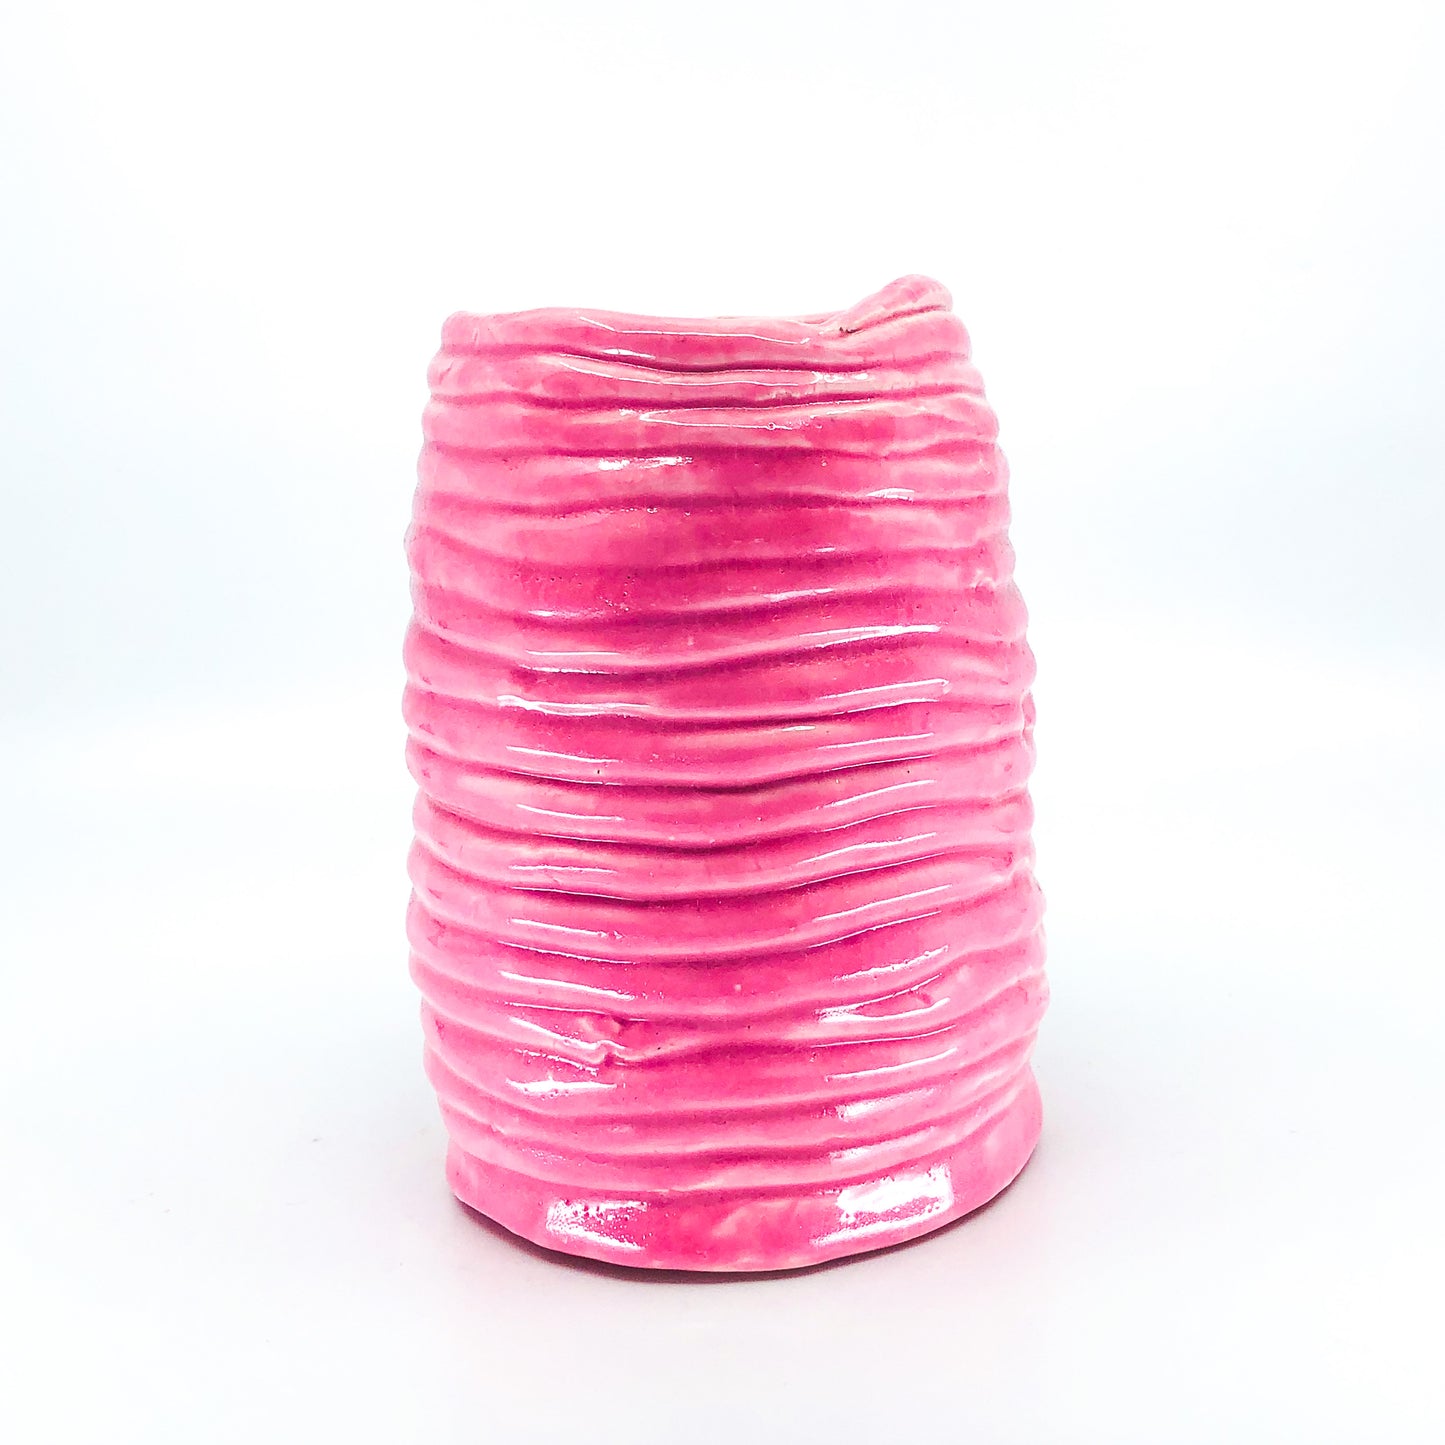 Vintage Handmade Ceramic Blush Pink Vase